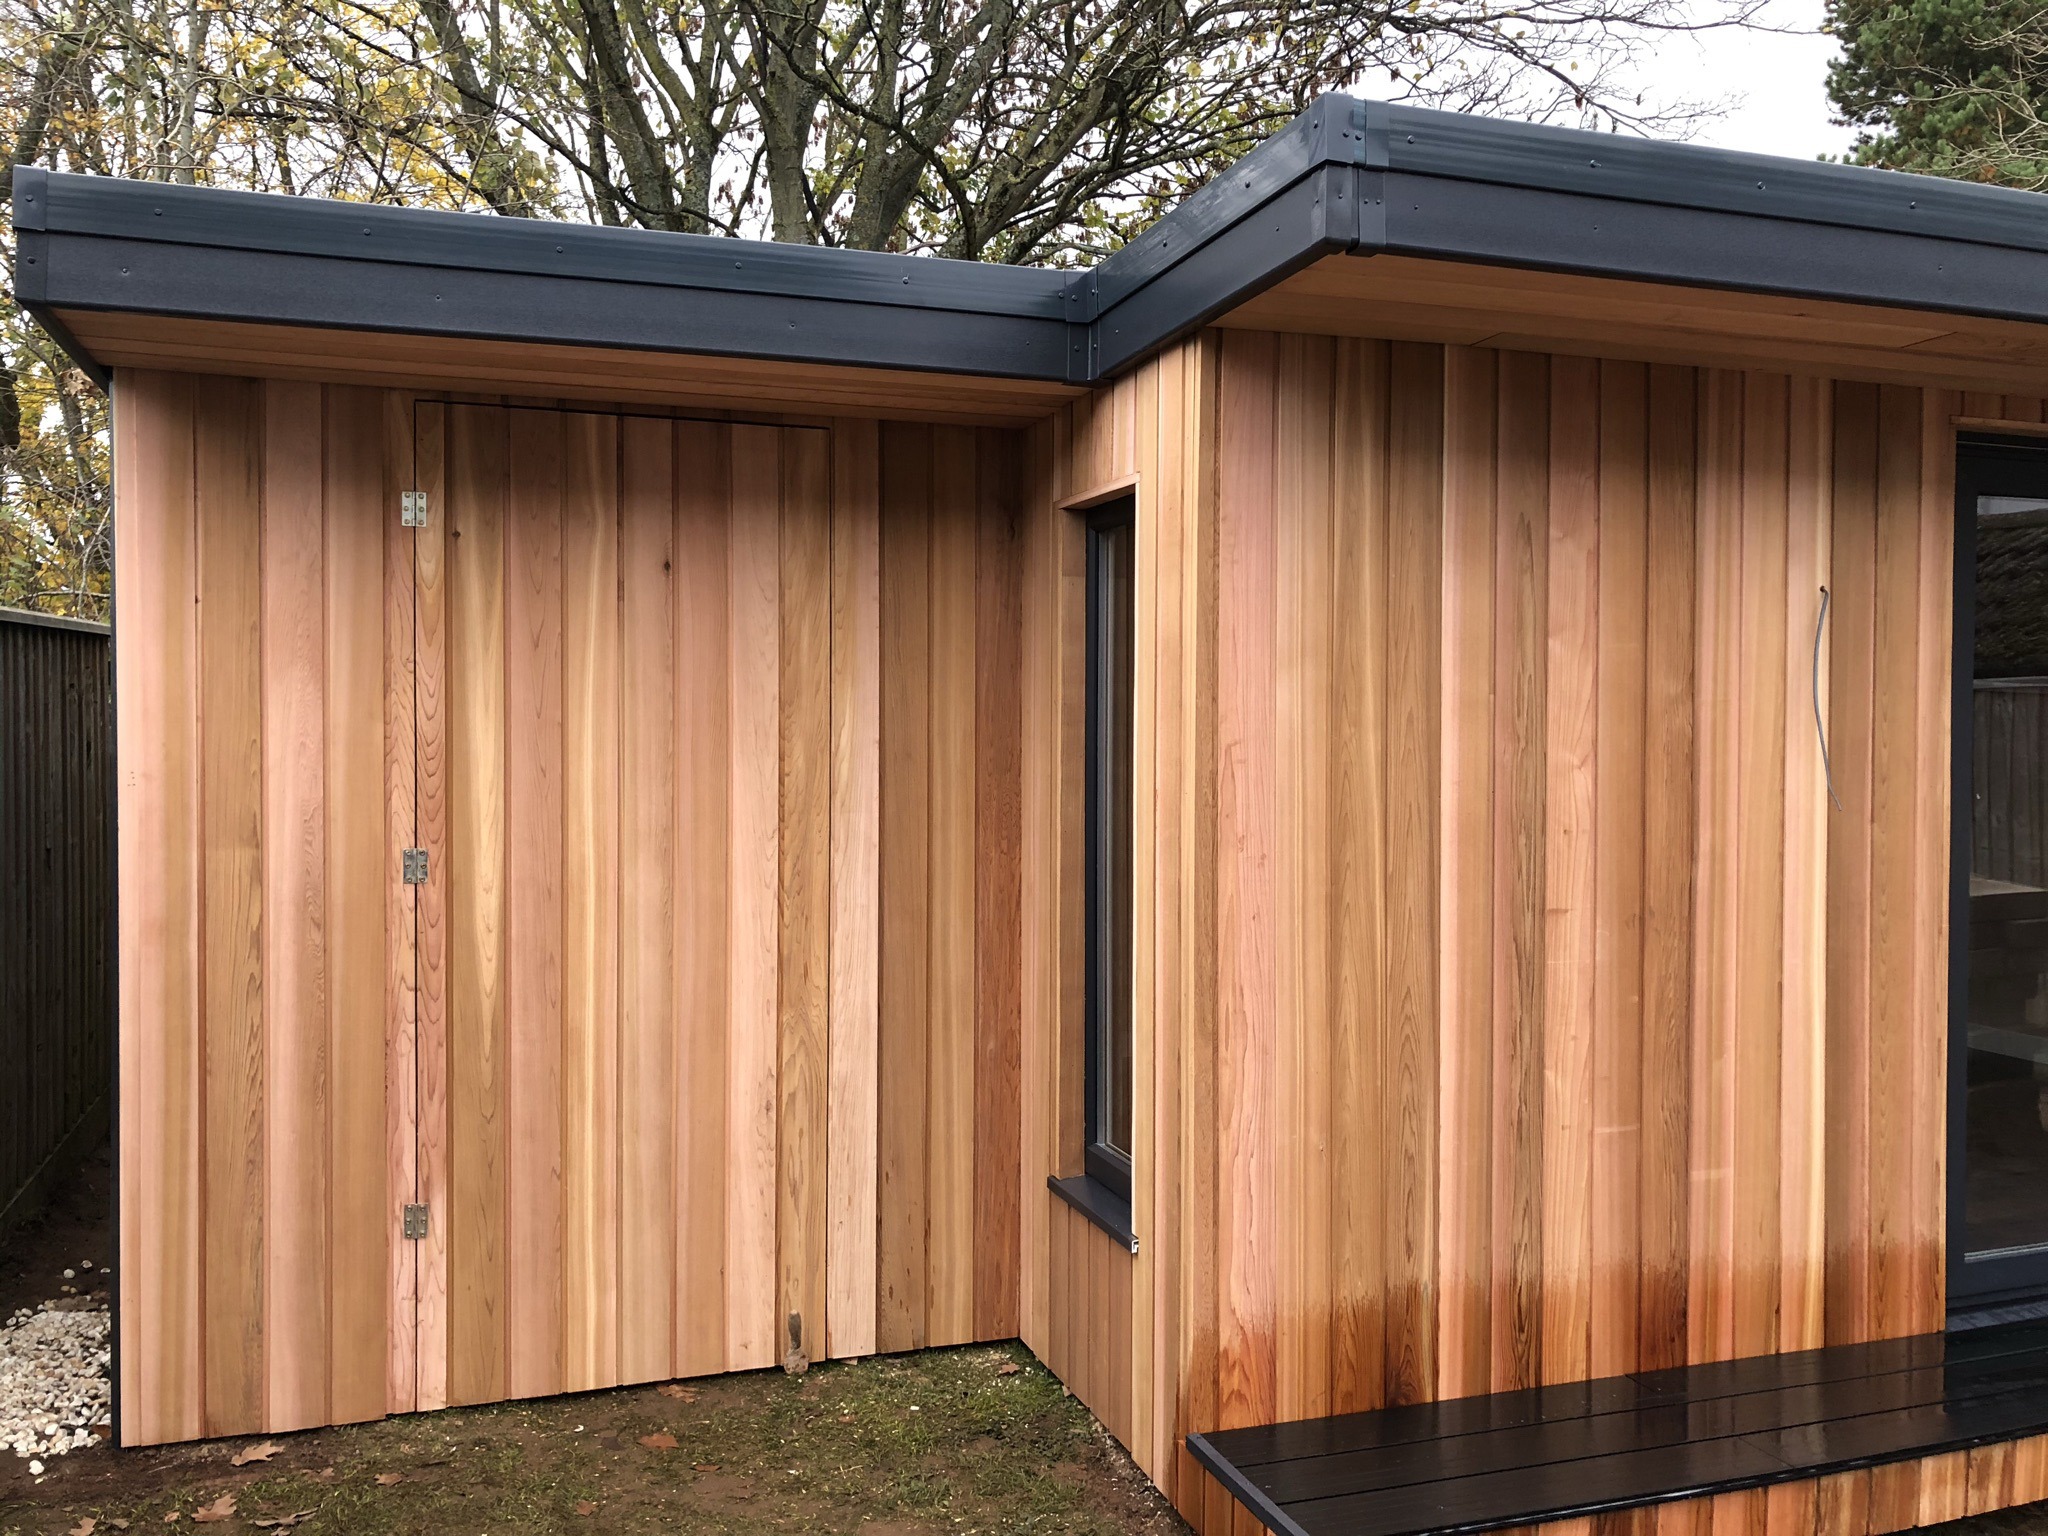 Bristol modified Cotham garden pod with hidden storage room clad in cedar